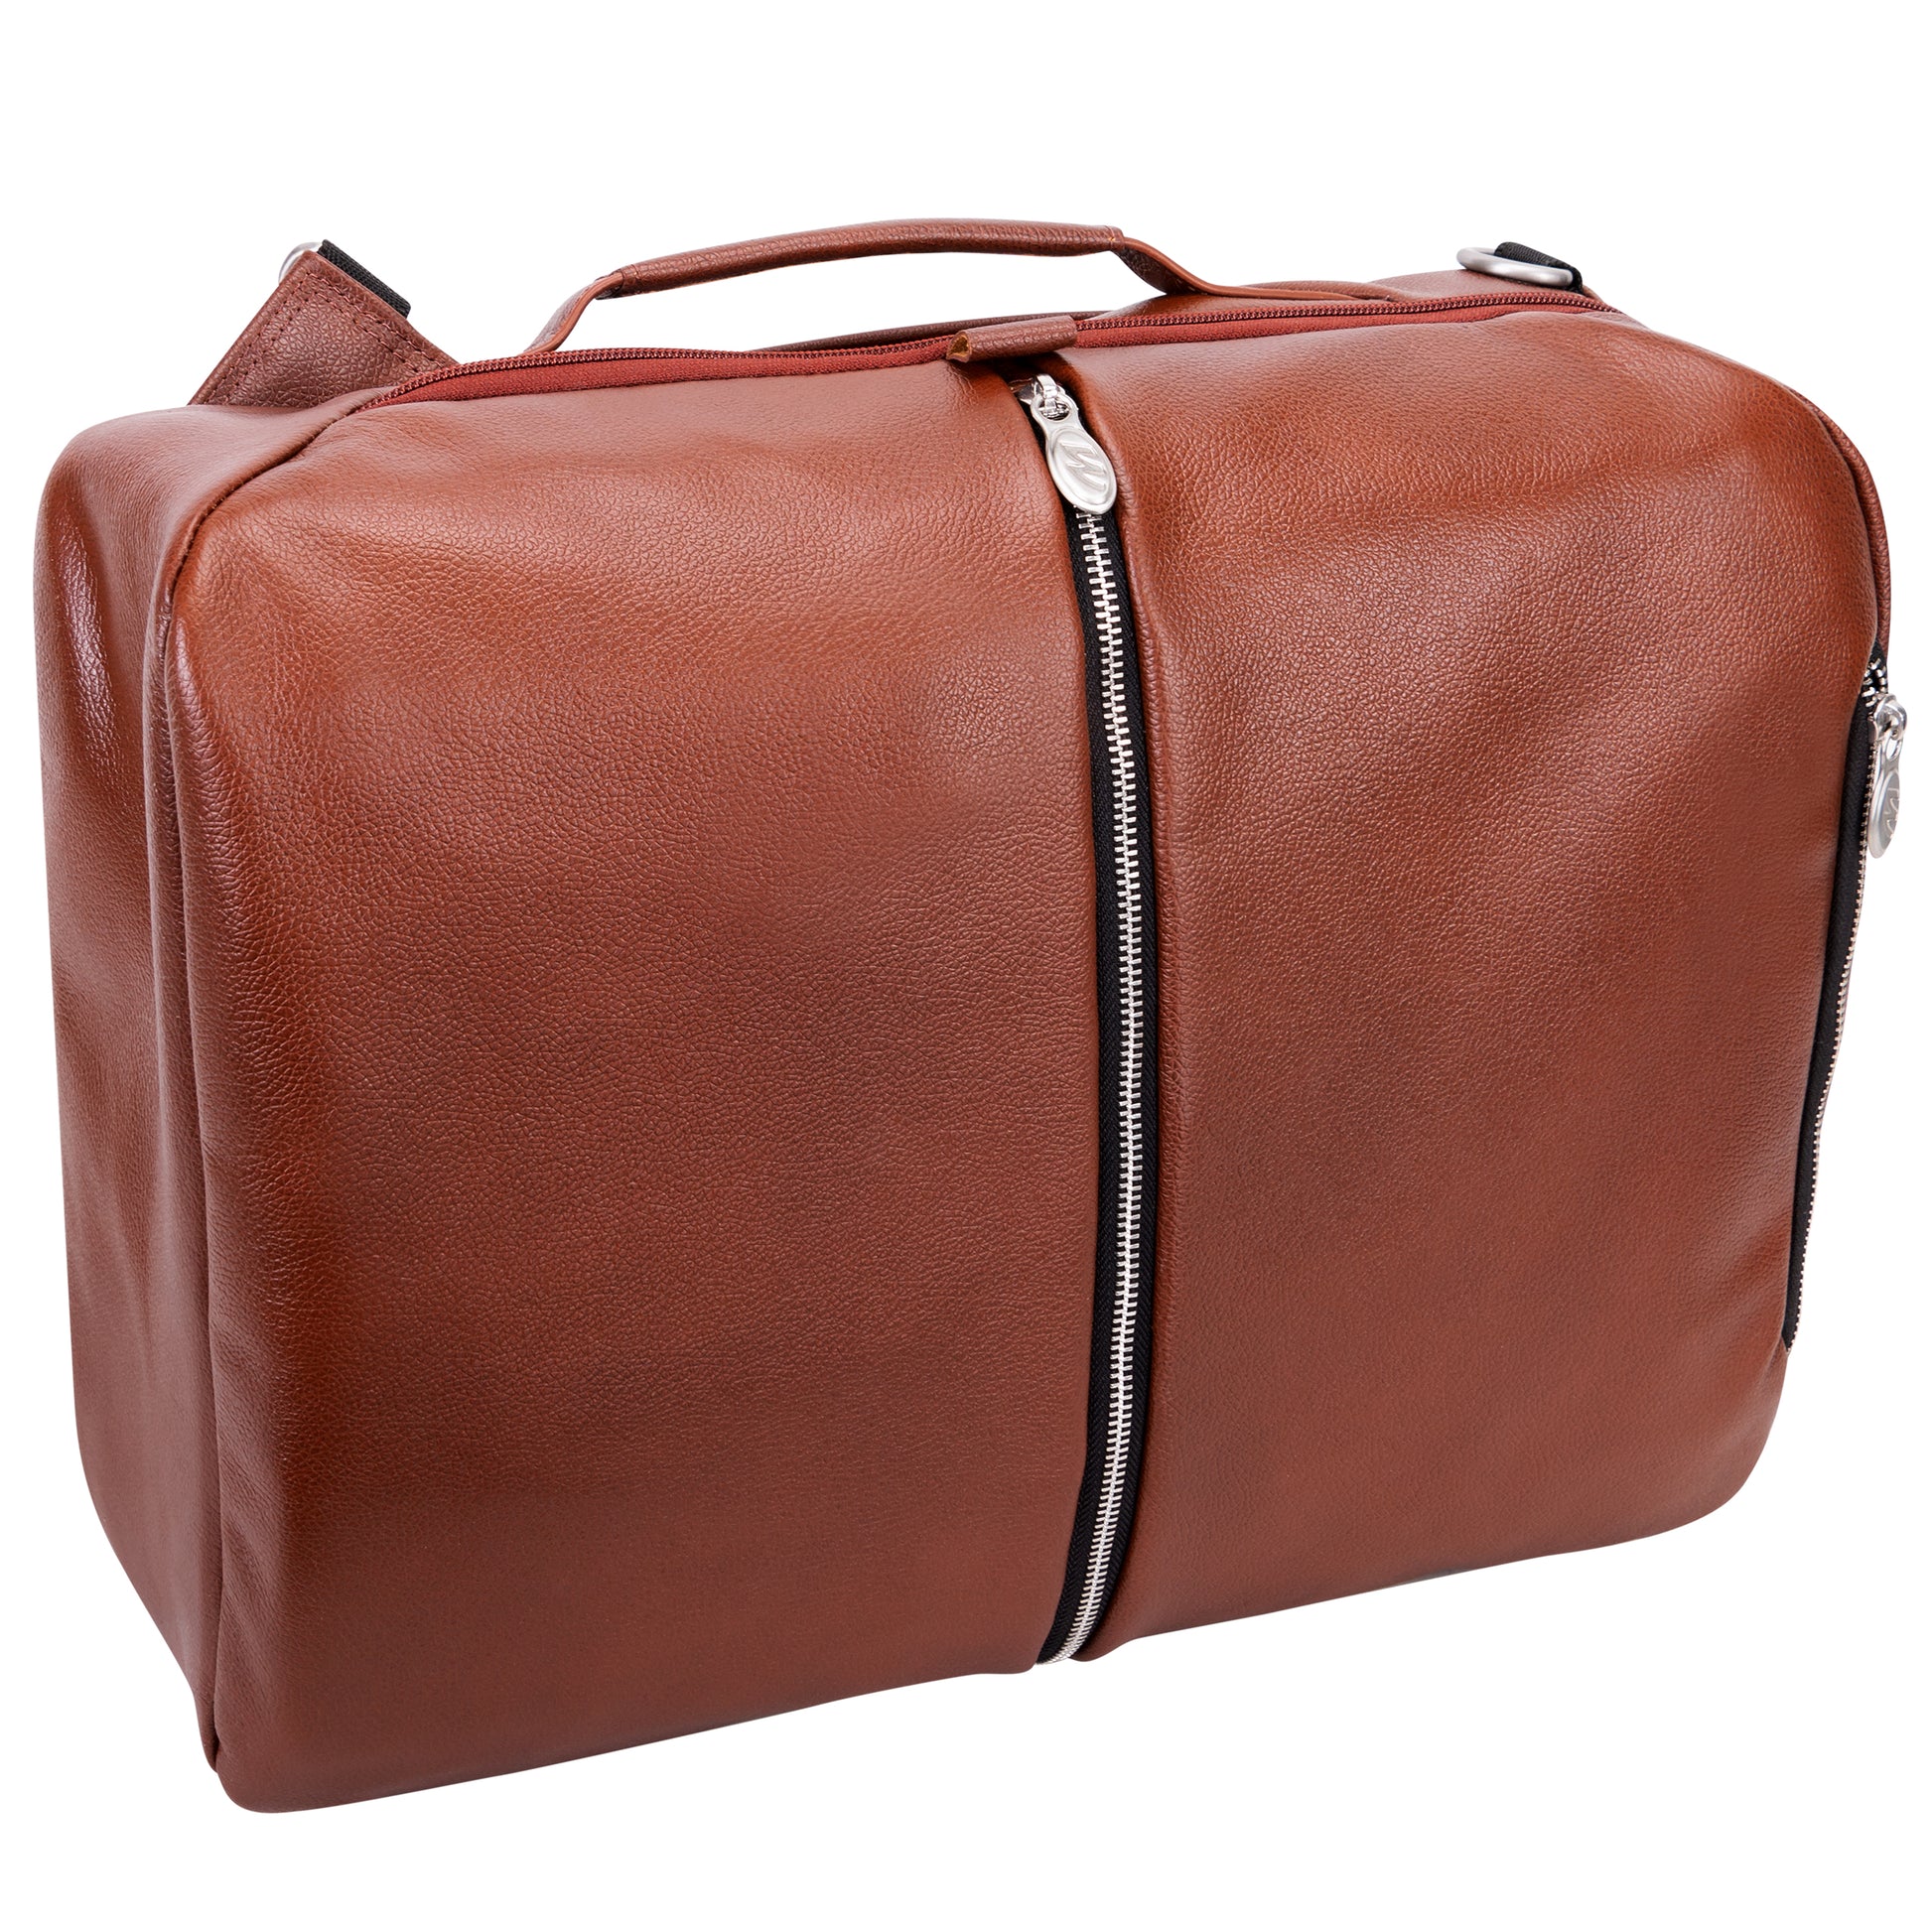 McKlein East Side 17 Nylon 2-in-1 Laptop Tablet Convertible Travel Backpack Cross-body - Black